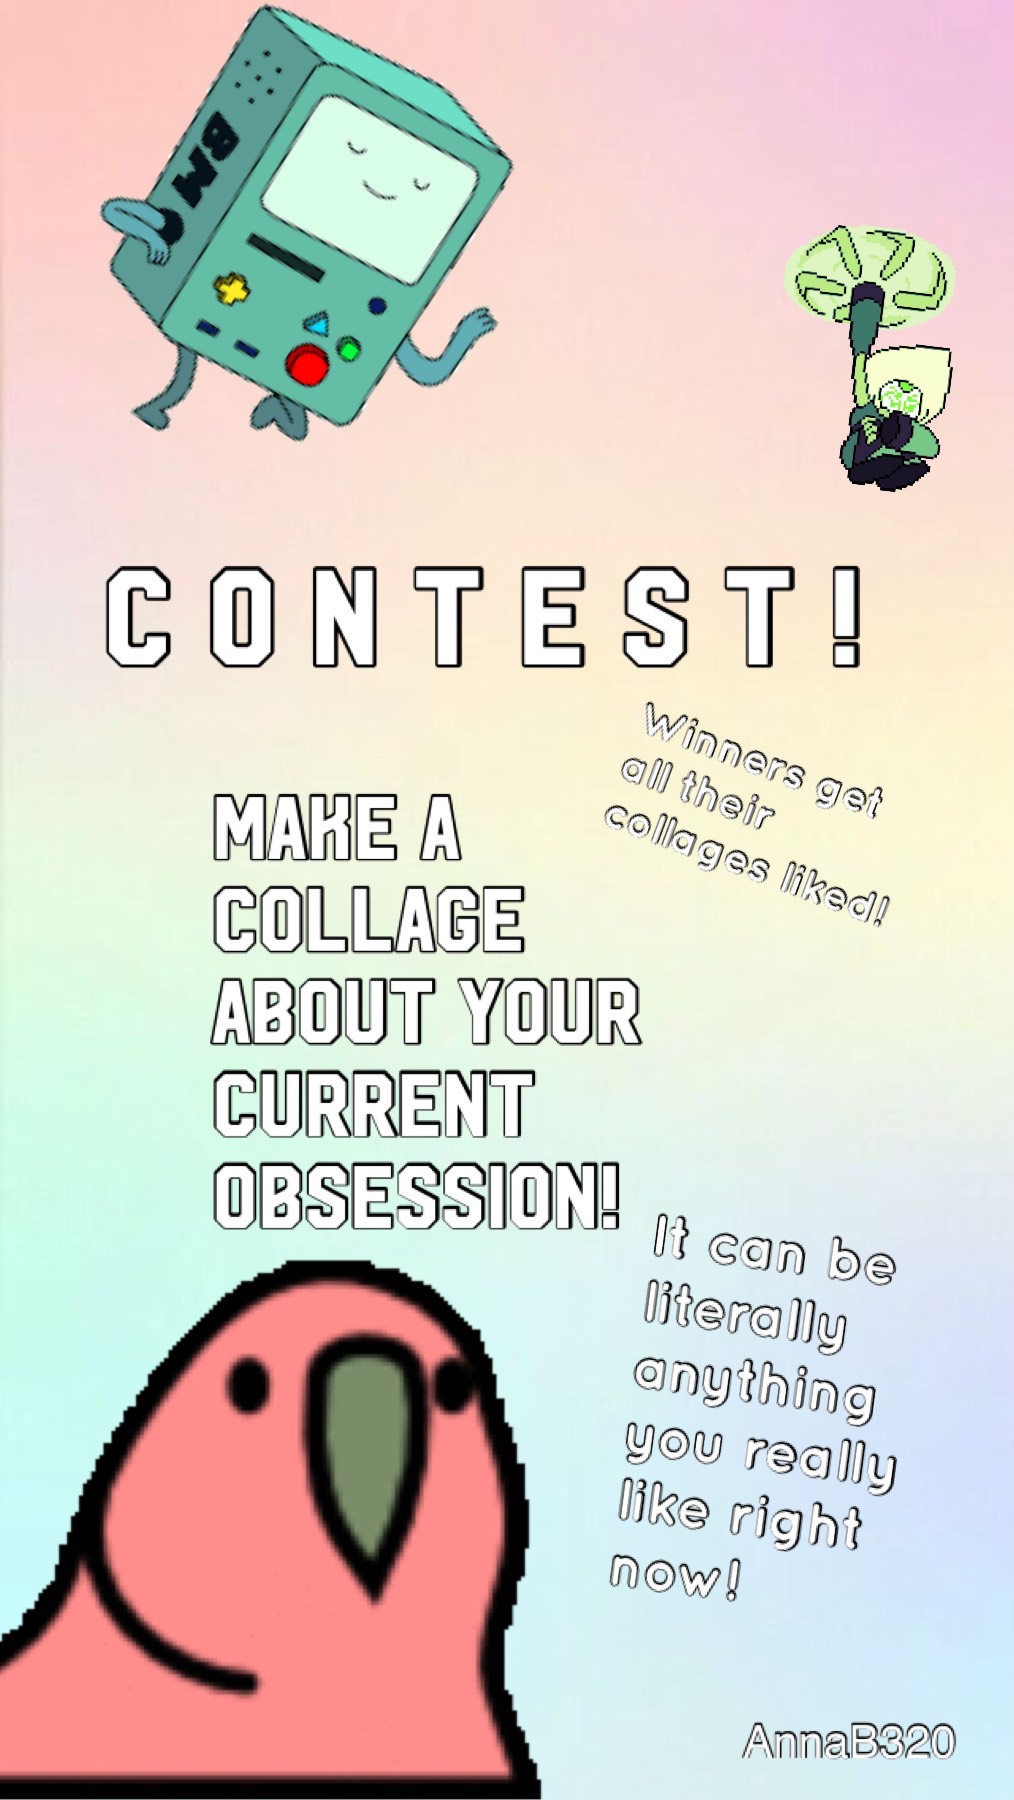 Contest!!